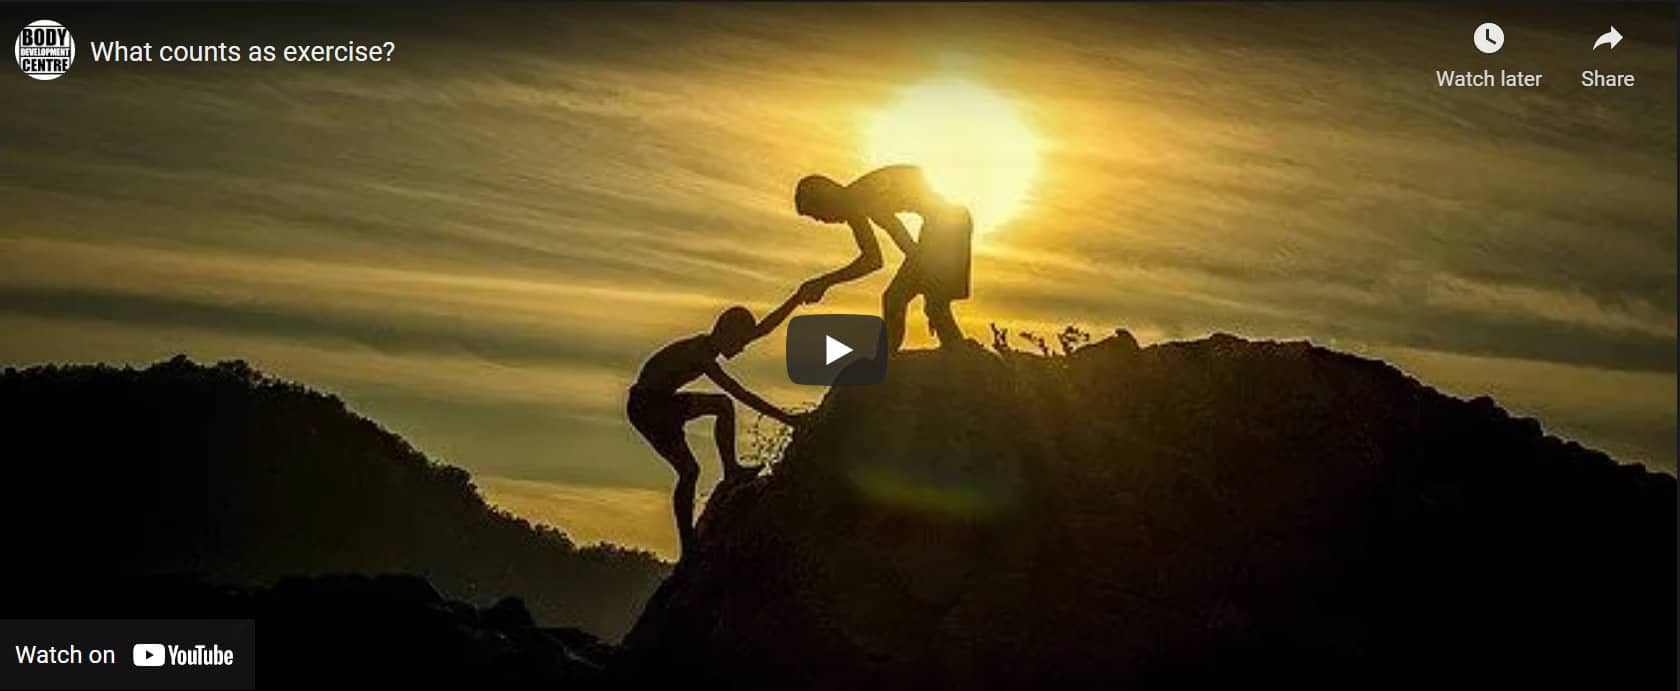 boys climbing sand duunes - alternative excercise